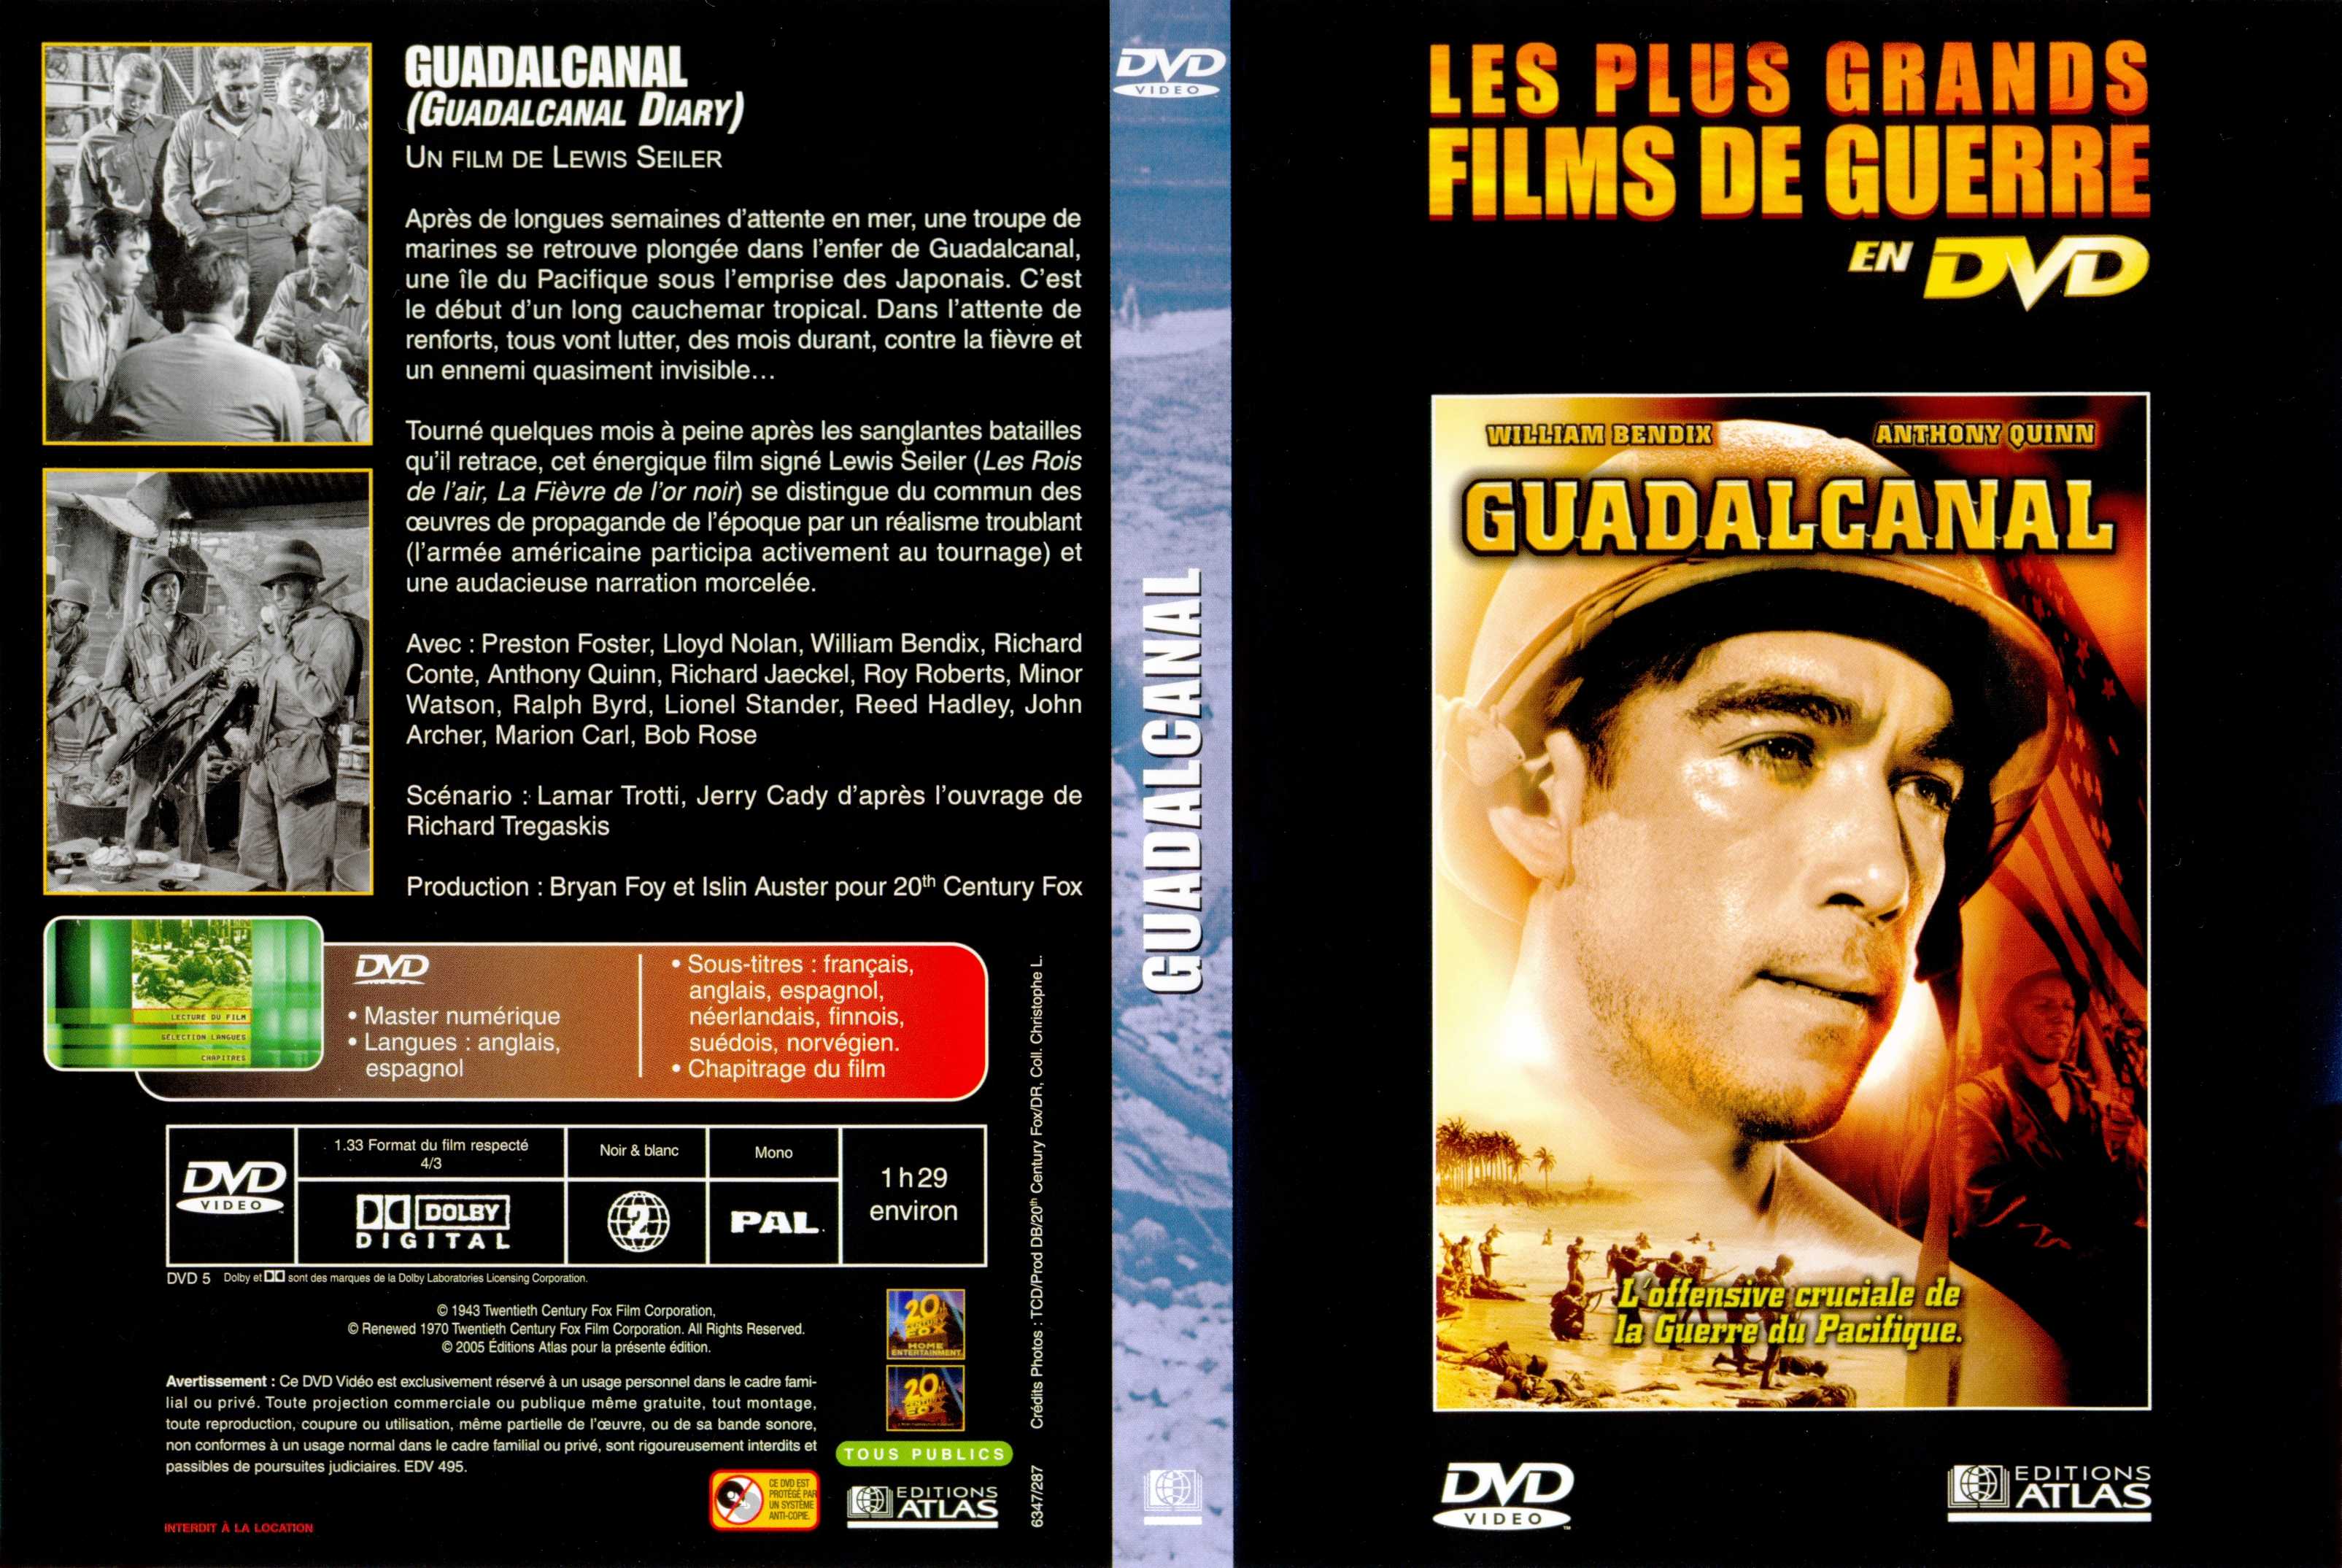 Jaquette DVD Guadalcanal